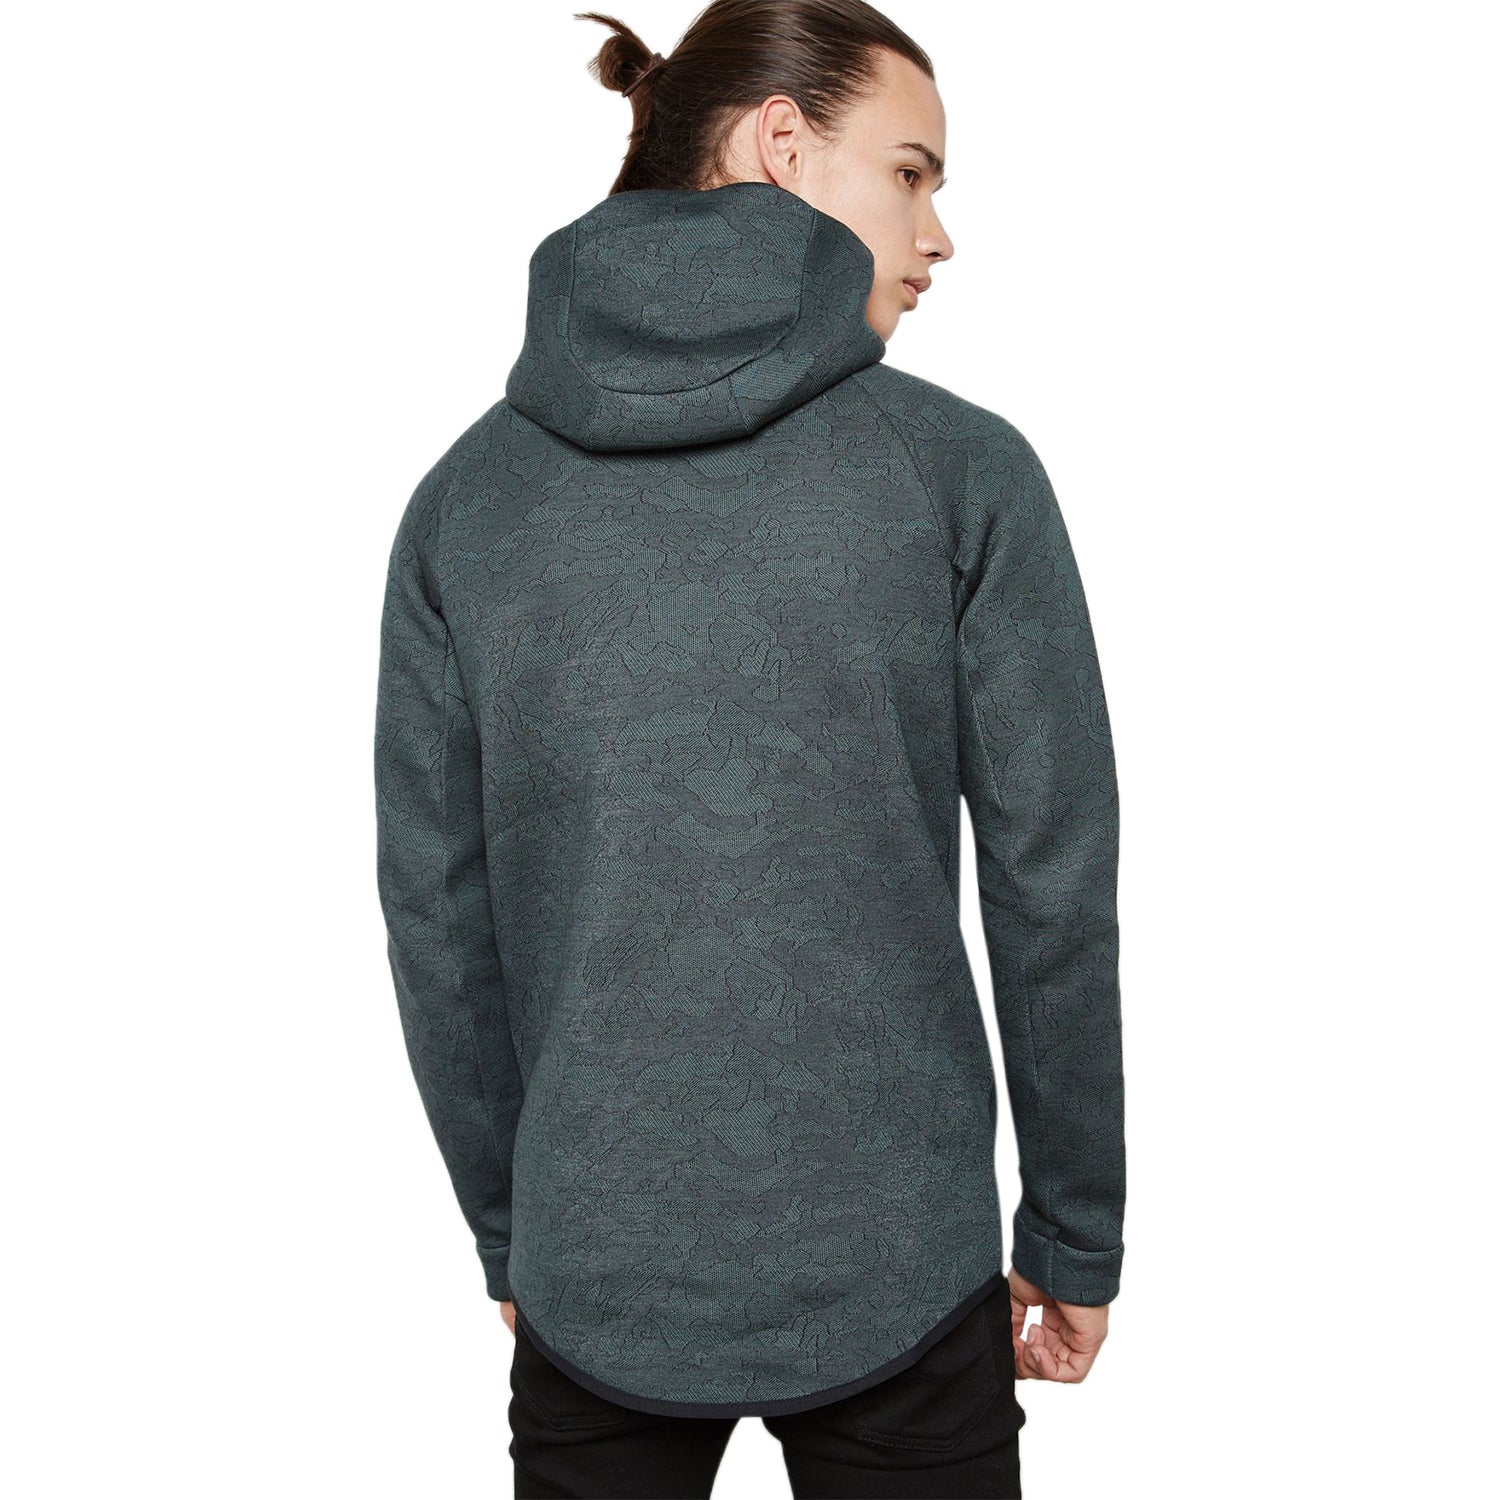 Nike Tech Fleece Full-zip Jacquard Hoodie Mens Style : 863814